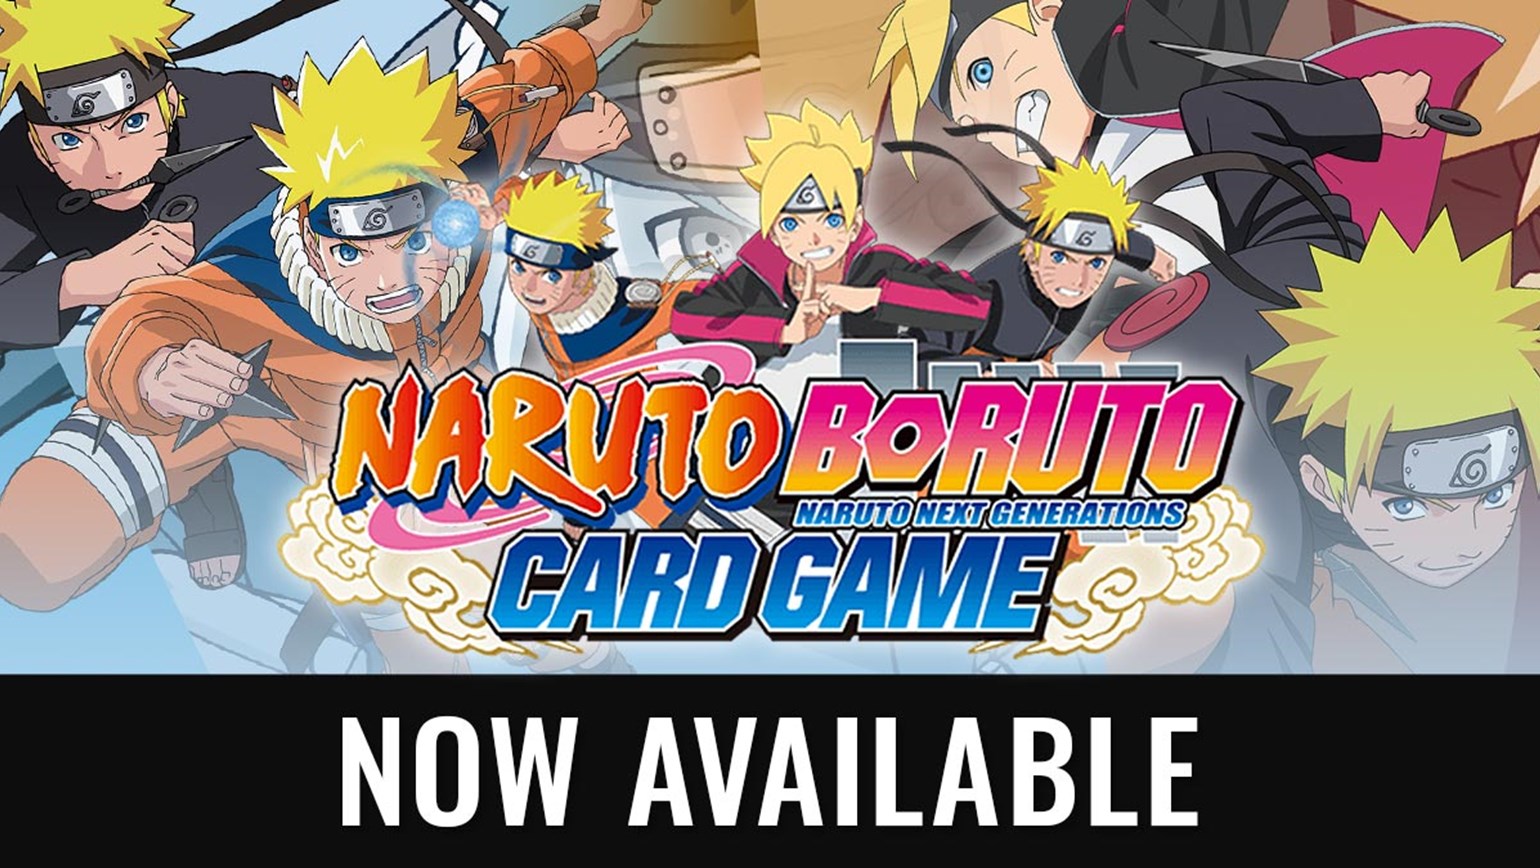 Boruto: Naruto Next Generations - The Board Game